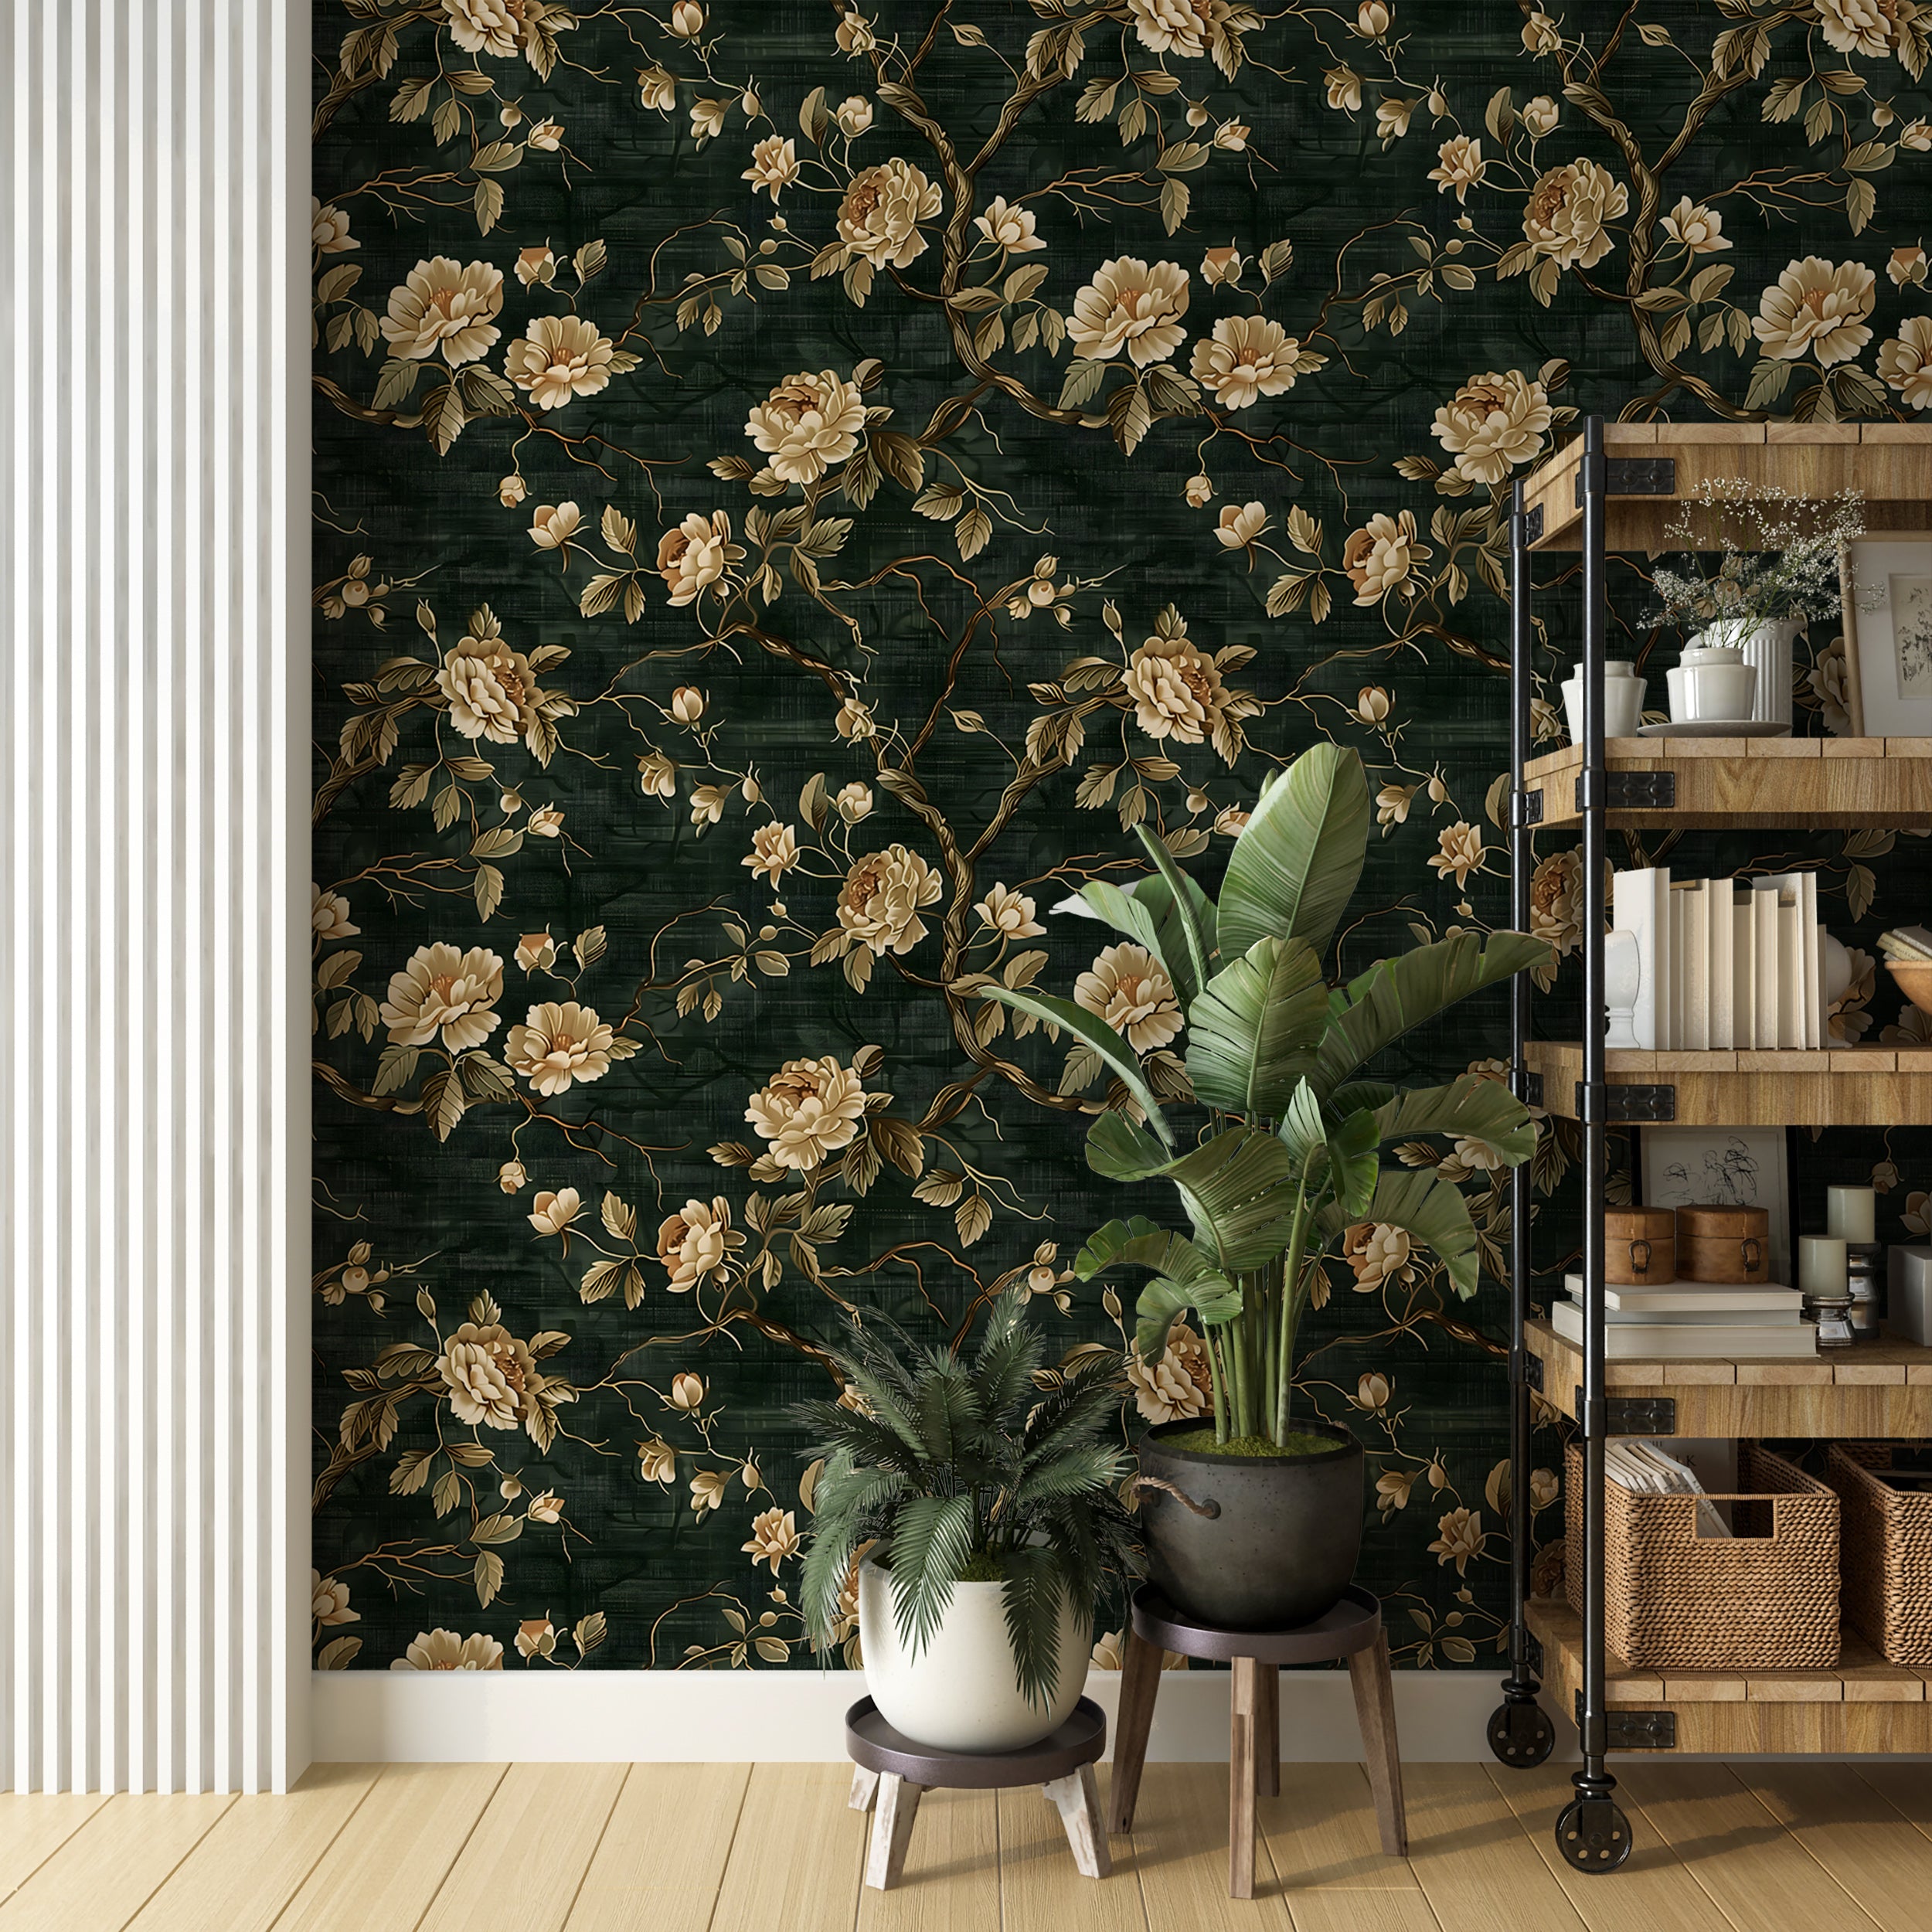 Beige roses peel and stick wallpaper Removable vintage botanical decor